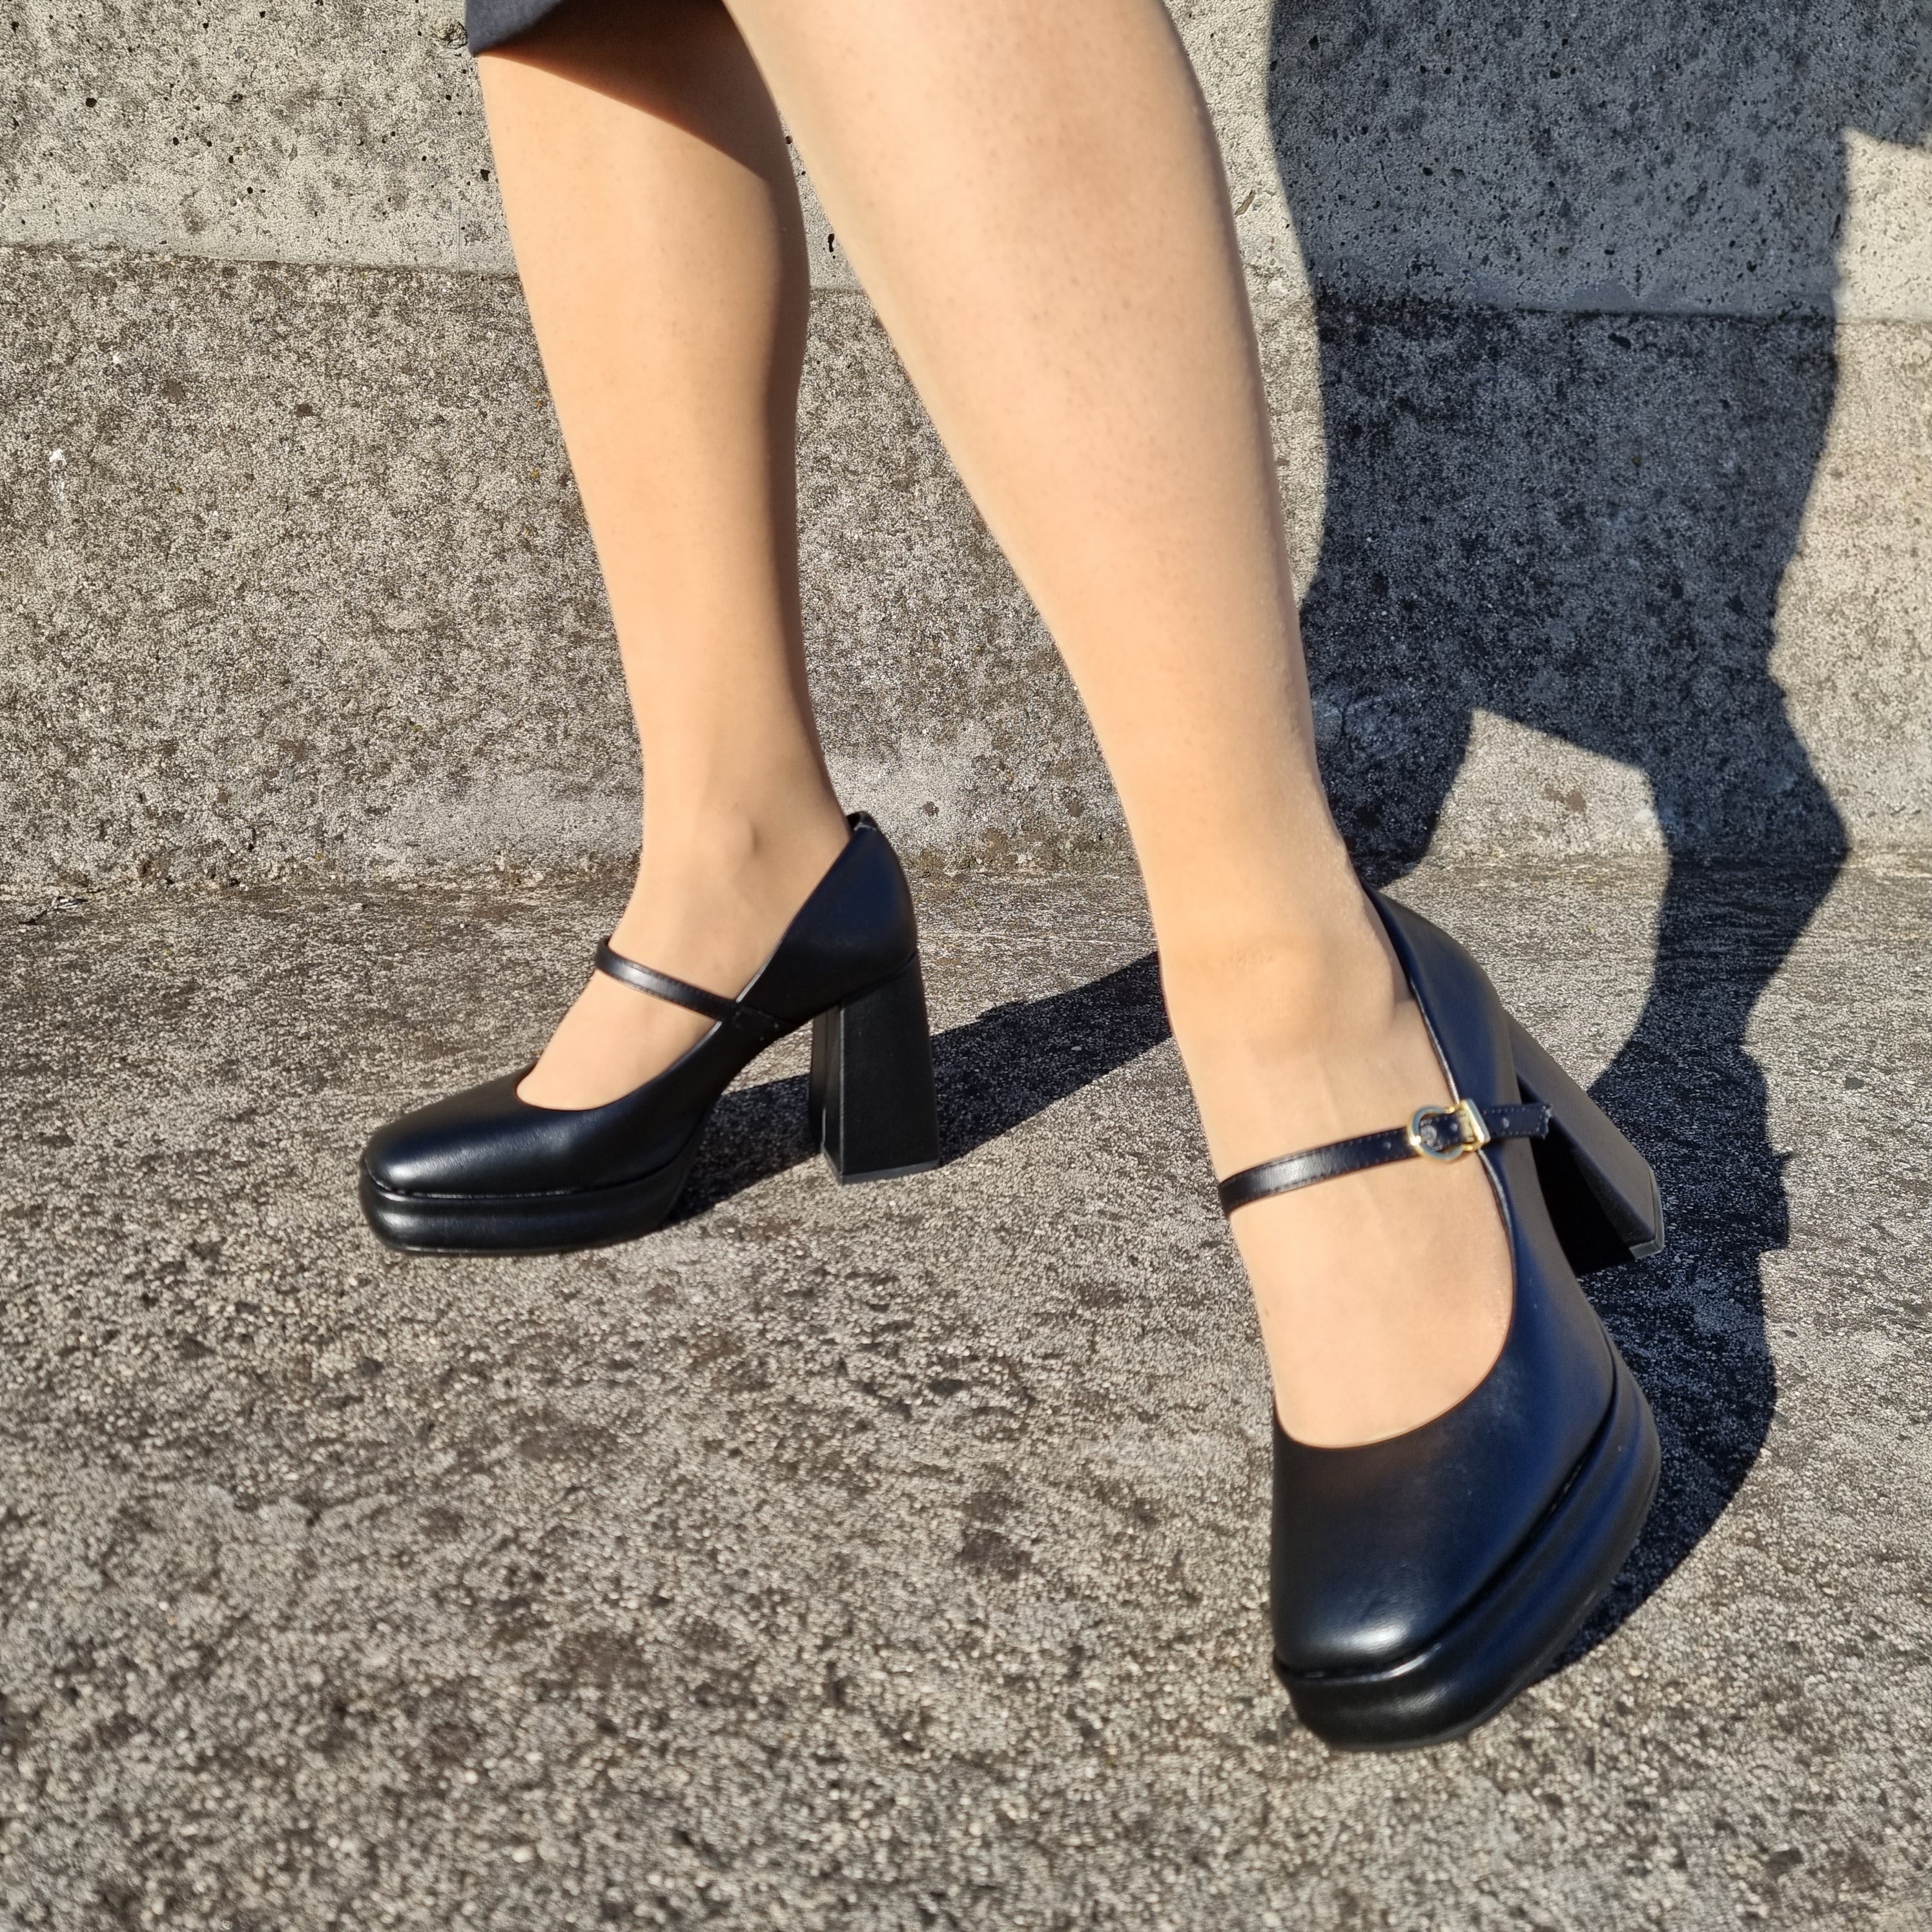 ASOS DESIGN Sebi chunky mary jane heeled shoes in black patent | ASOS